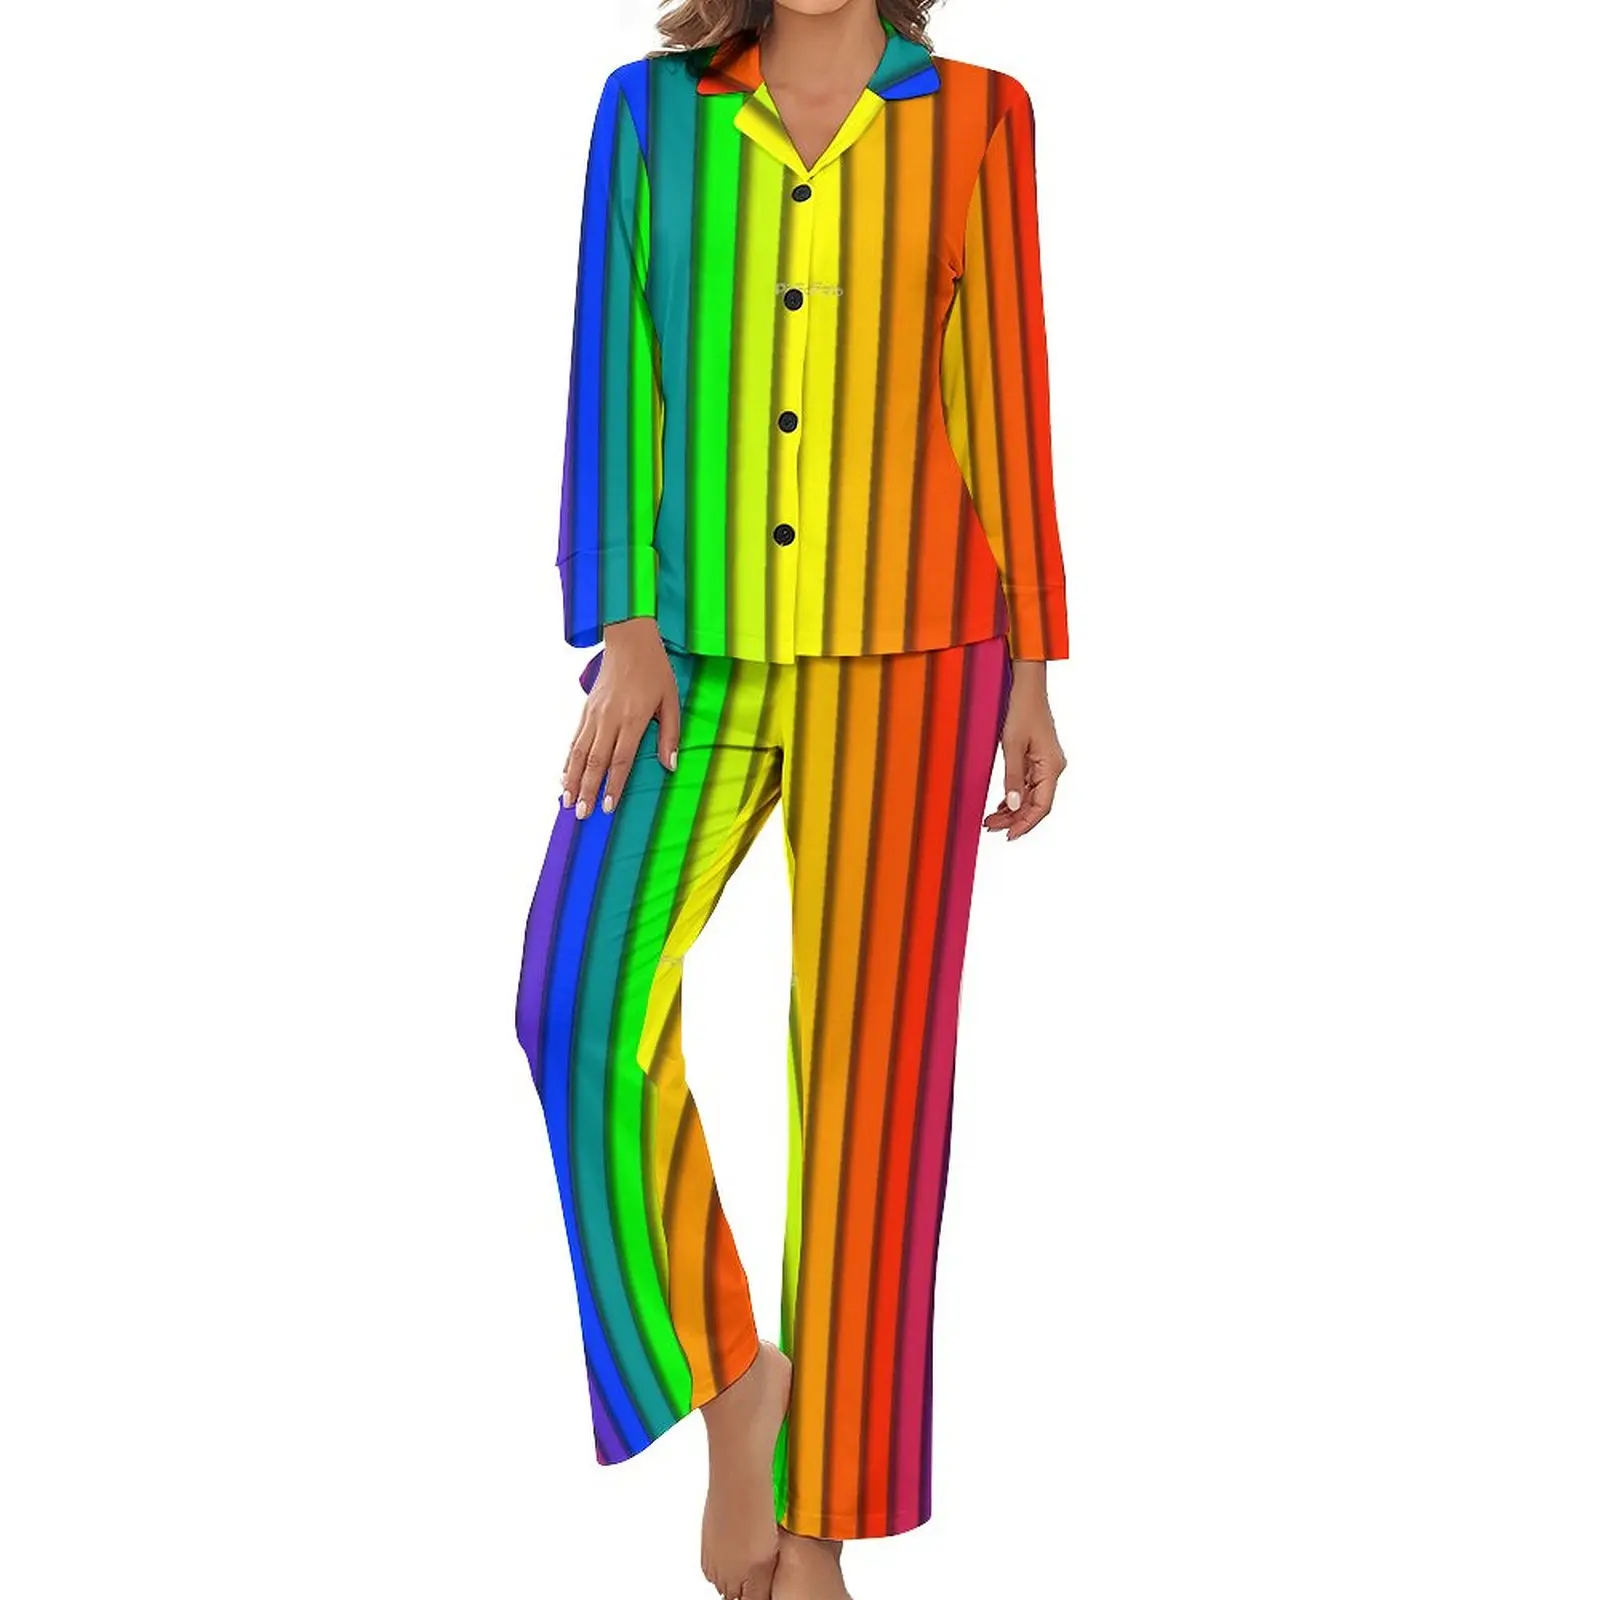 

Rainbow Striped Pajamas Women Vertical Lines Print Fashion Nightwear Spring Long Sleeve 2 Piece Casual V Neck Design Pajama Sets